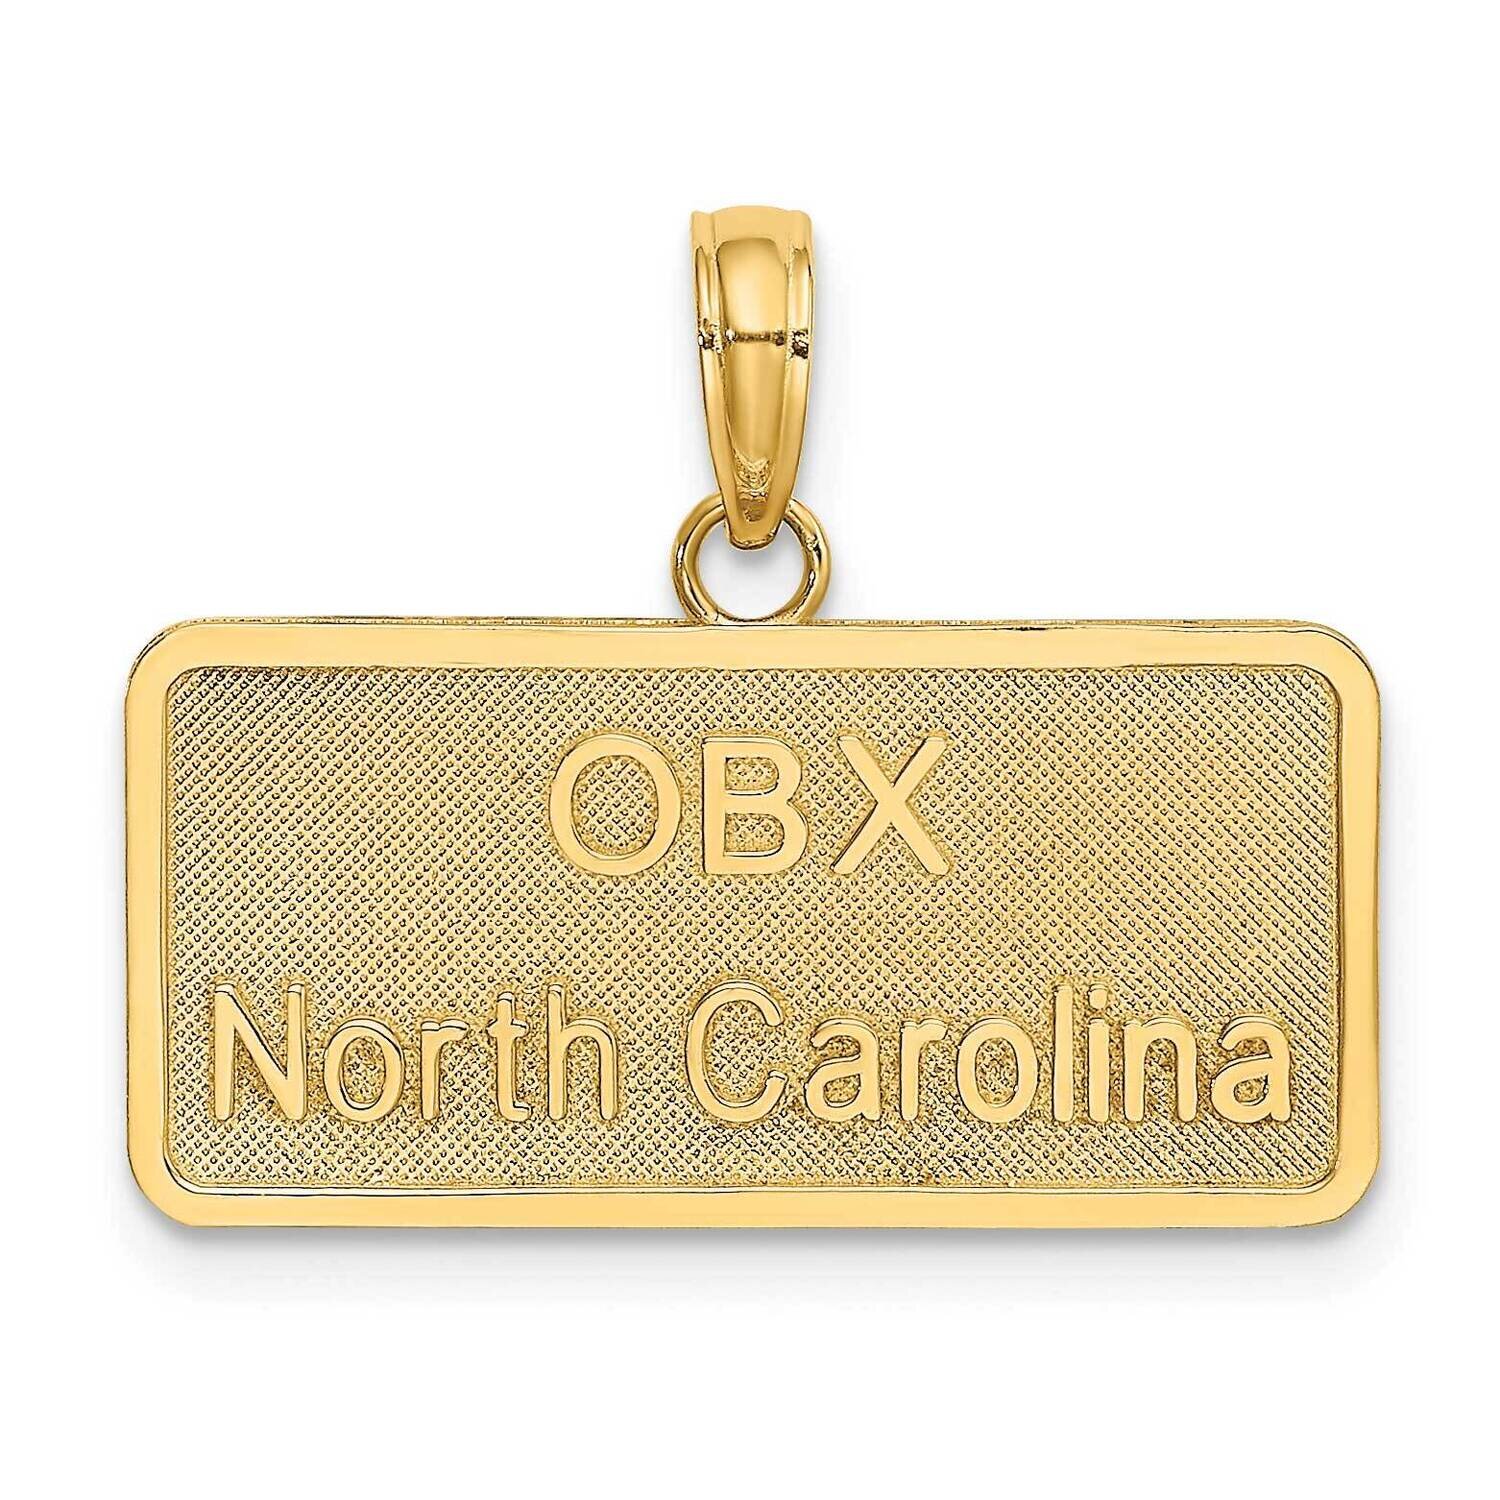 Obx North Carolina License Plate Charm 14k Gold K8644